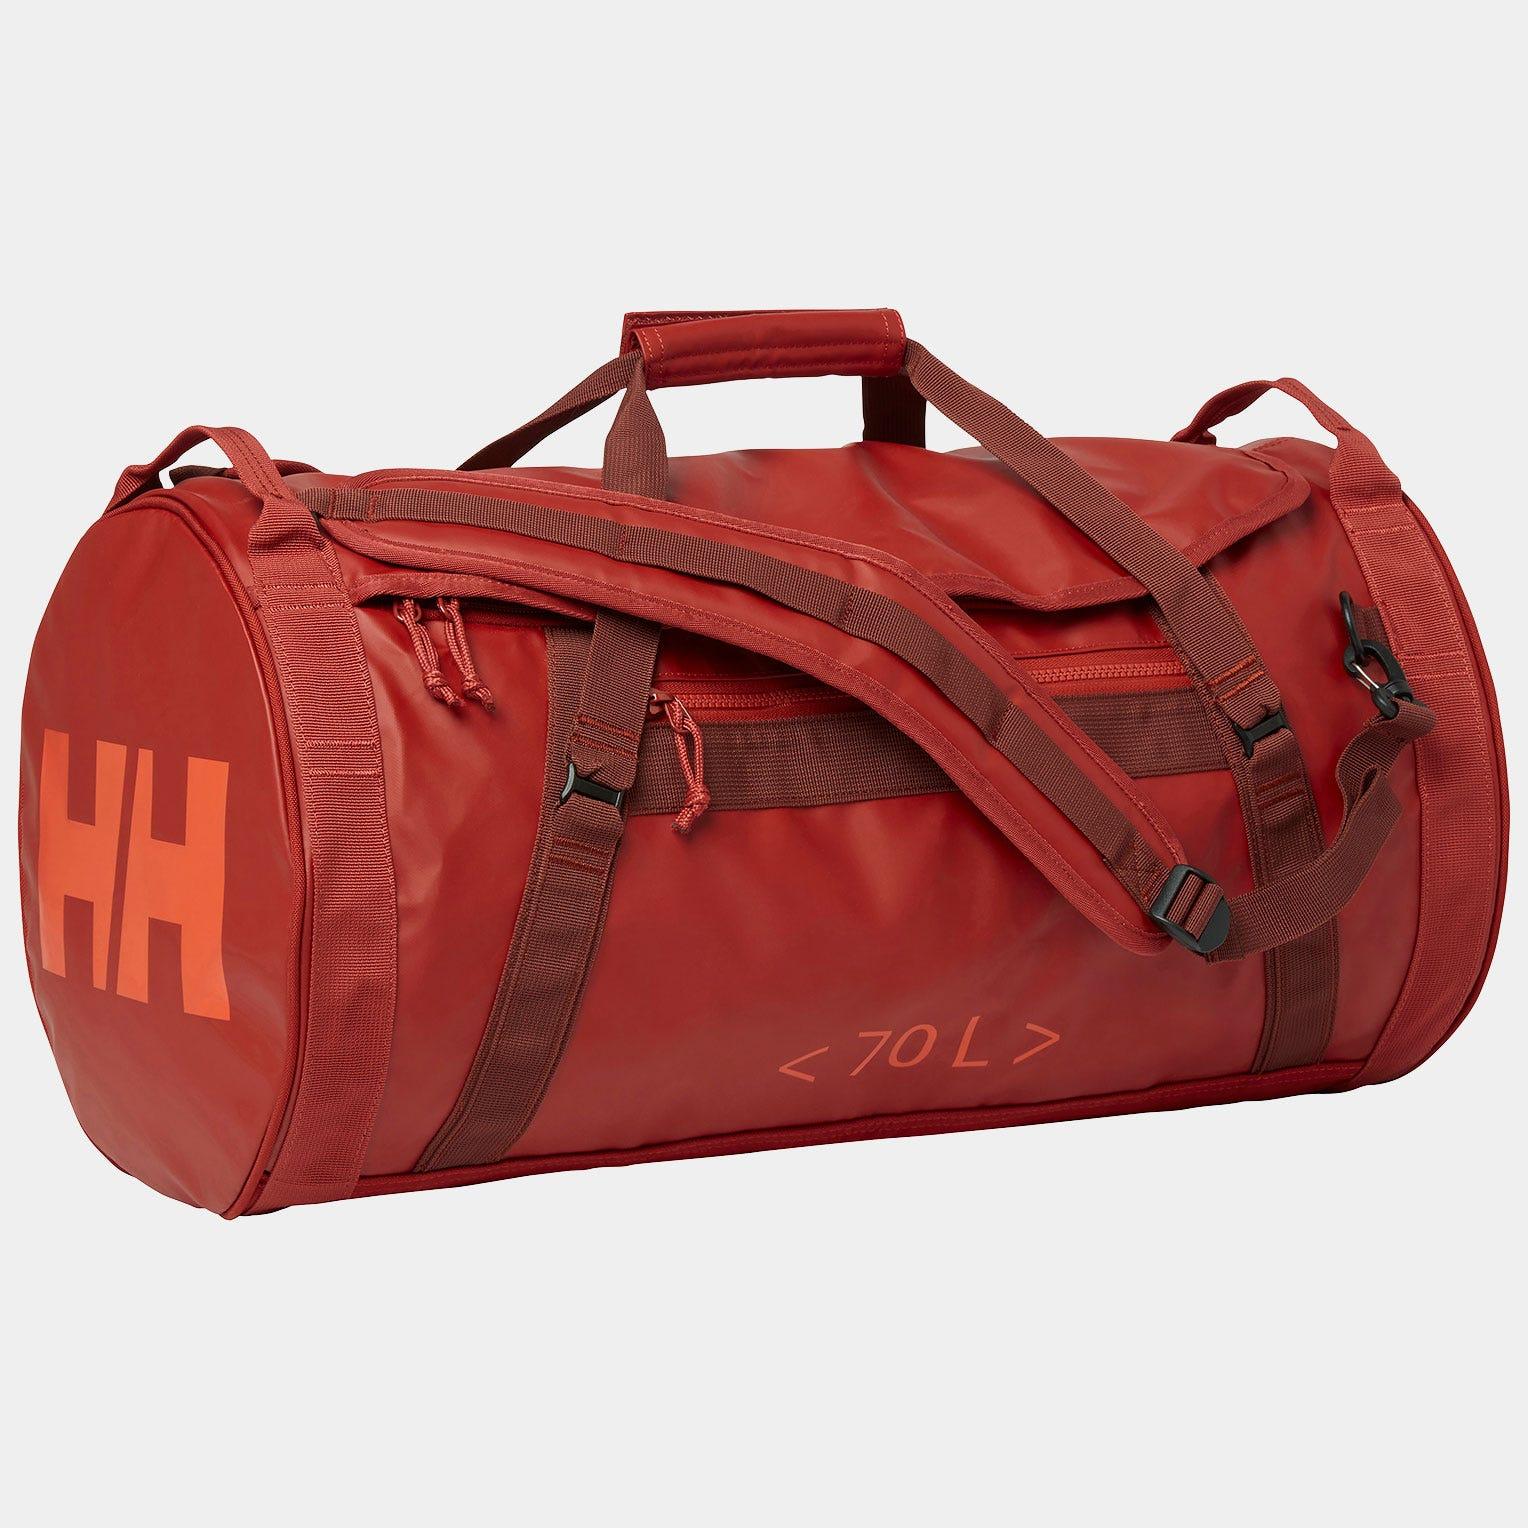 Helly Hansen Hh Sporty Duffel Bag 2 70l Red Std | Lyst UK